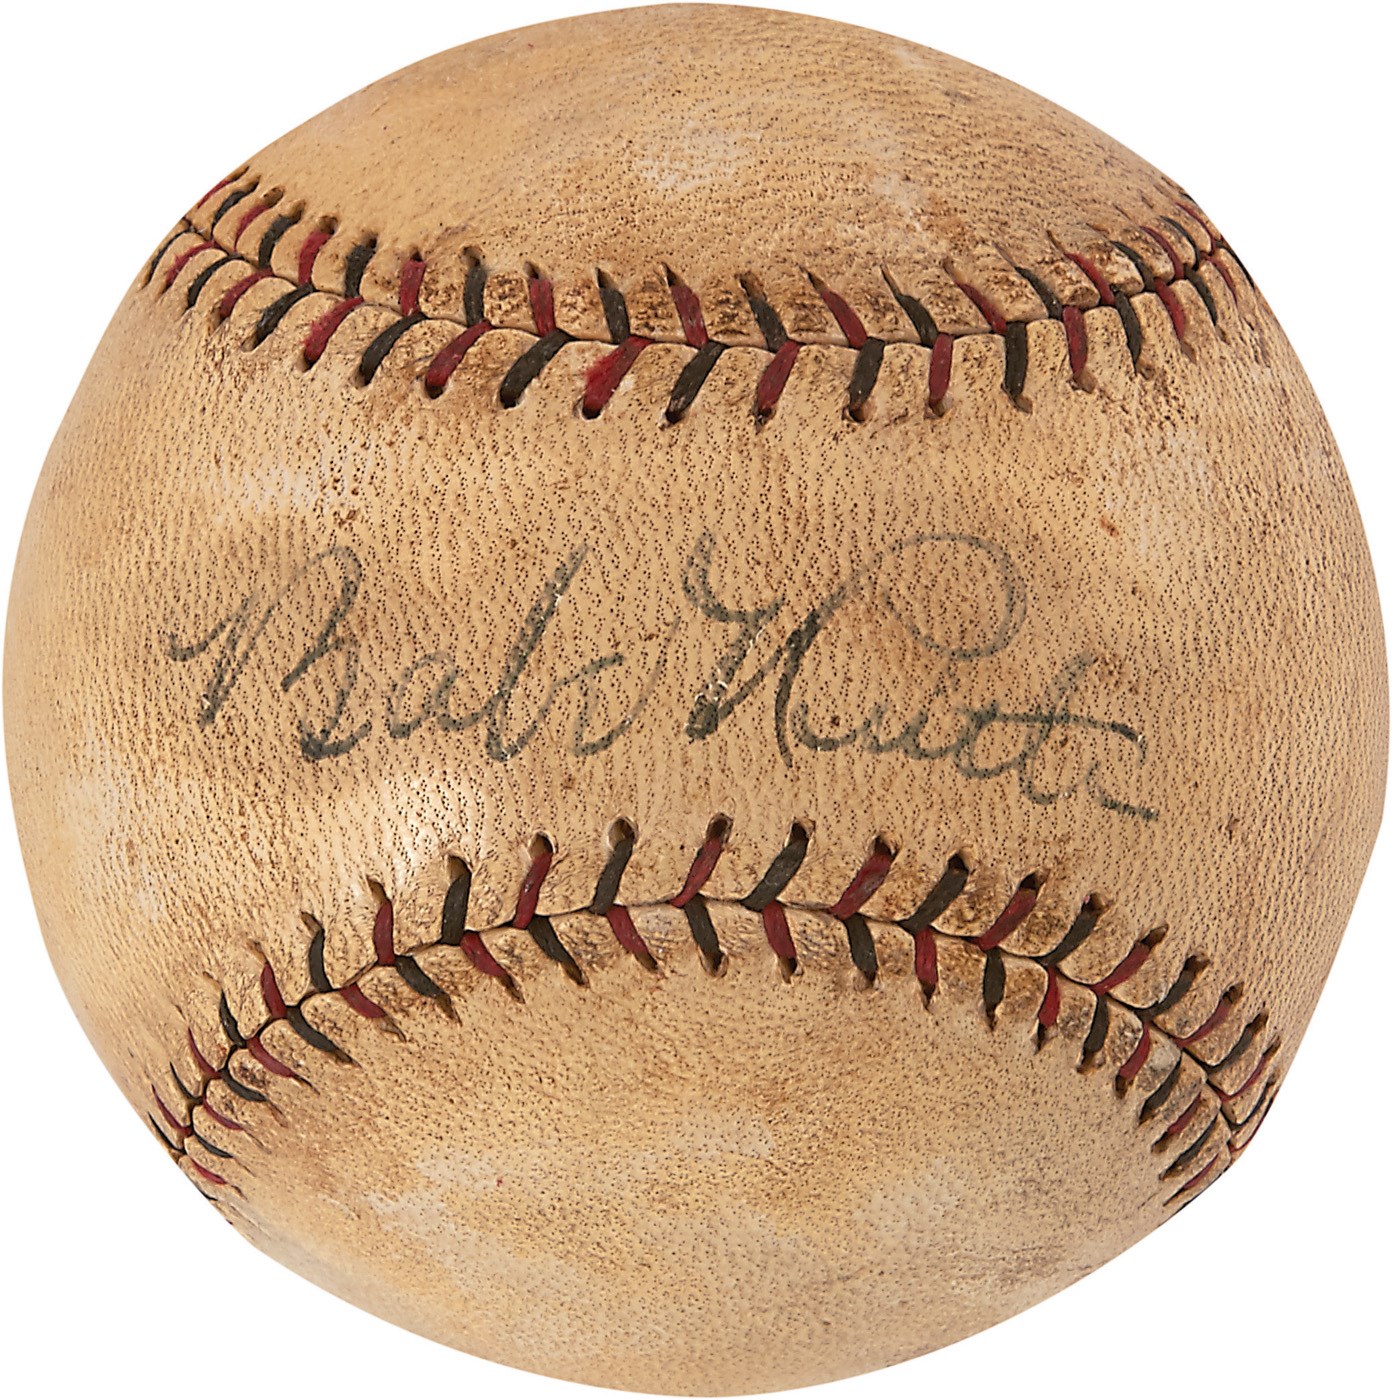 - 1926-33 Babe Ruth Single-Signed Baseball (PSA/DNA)